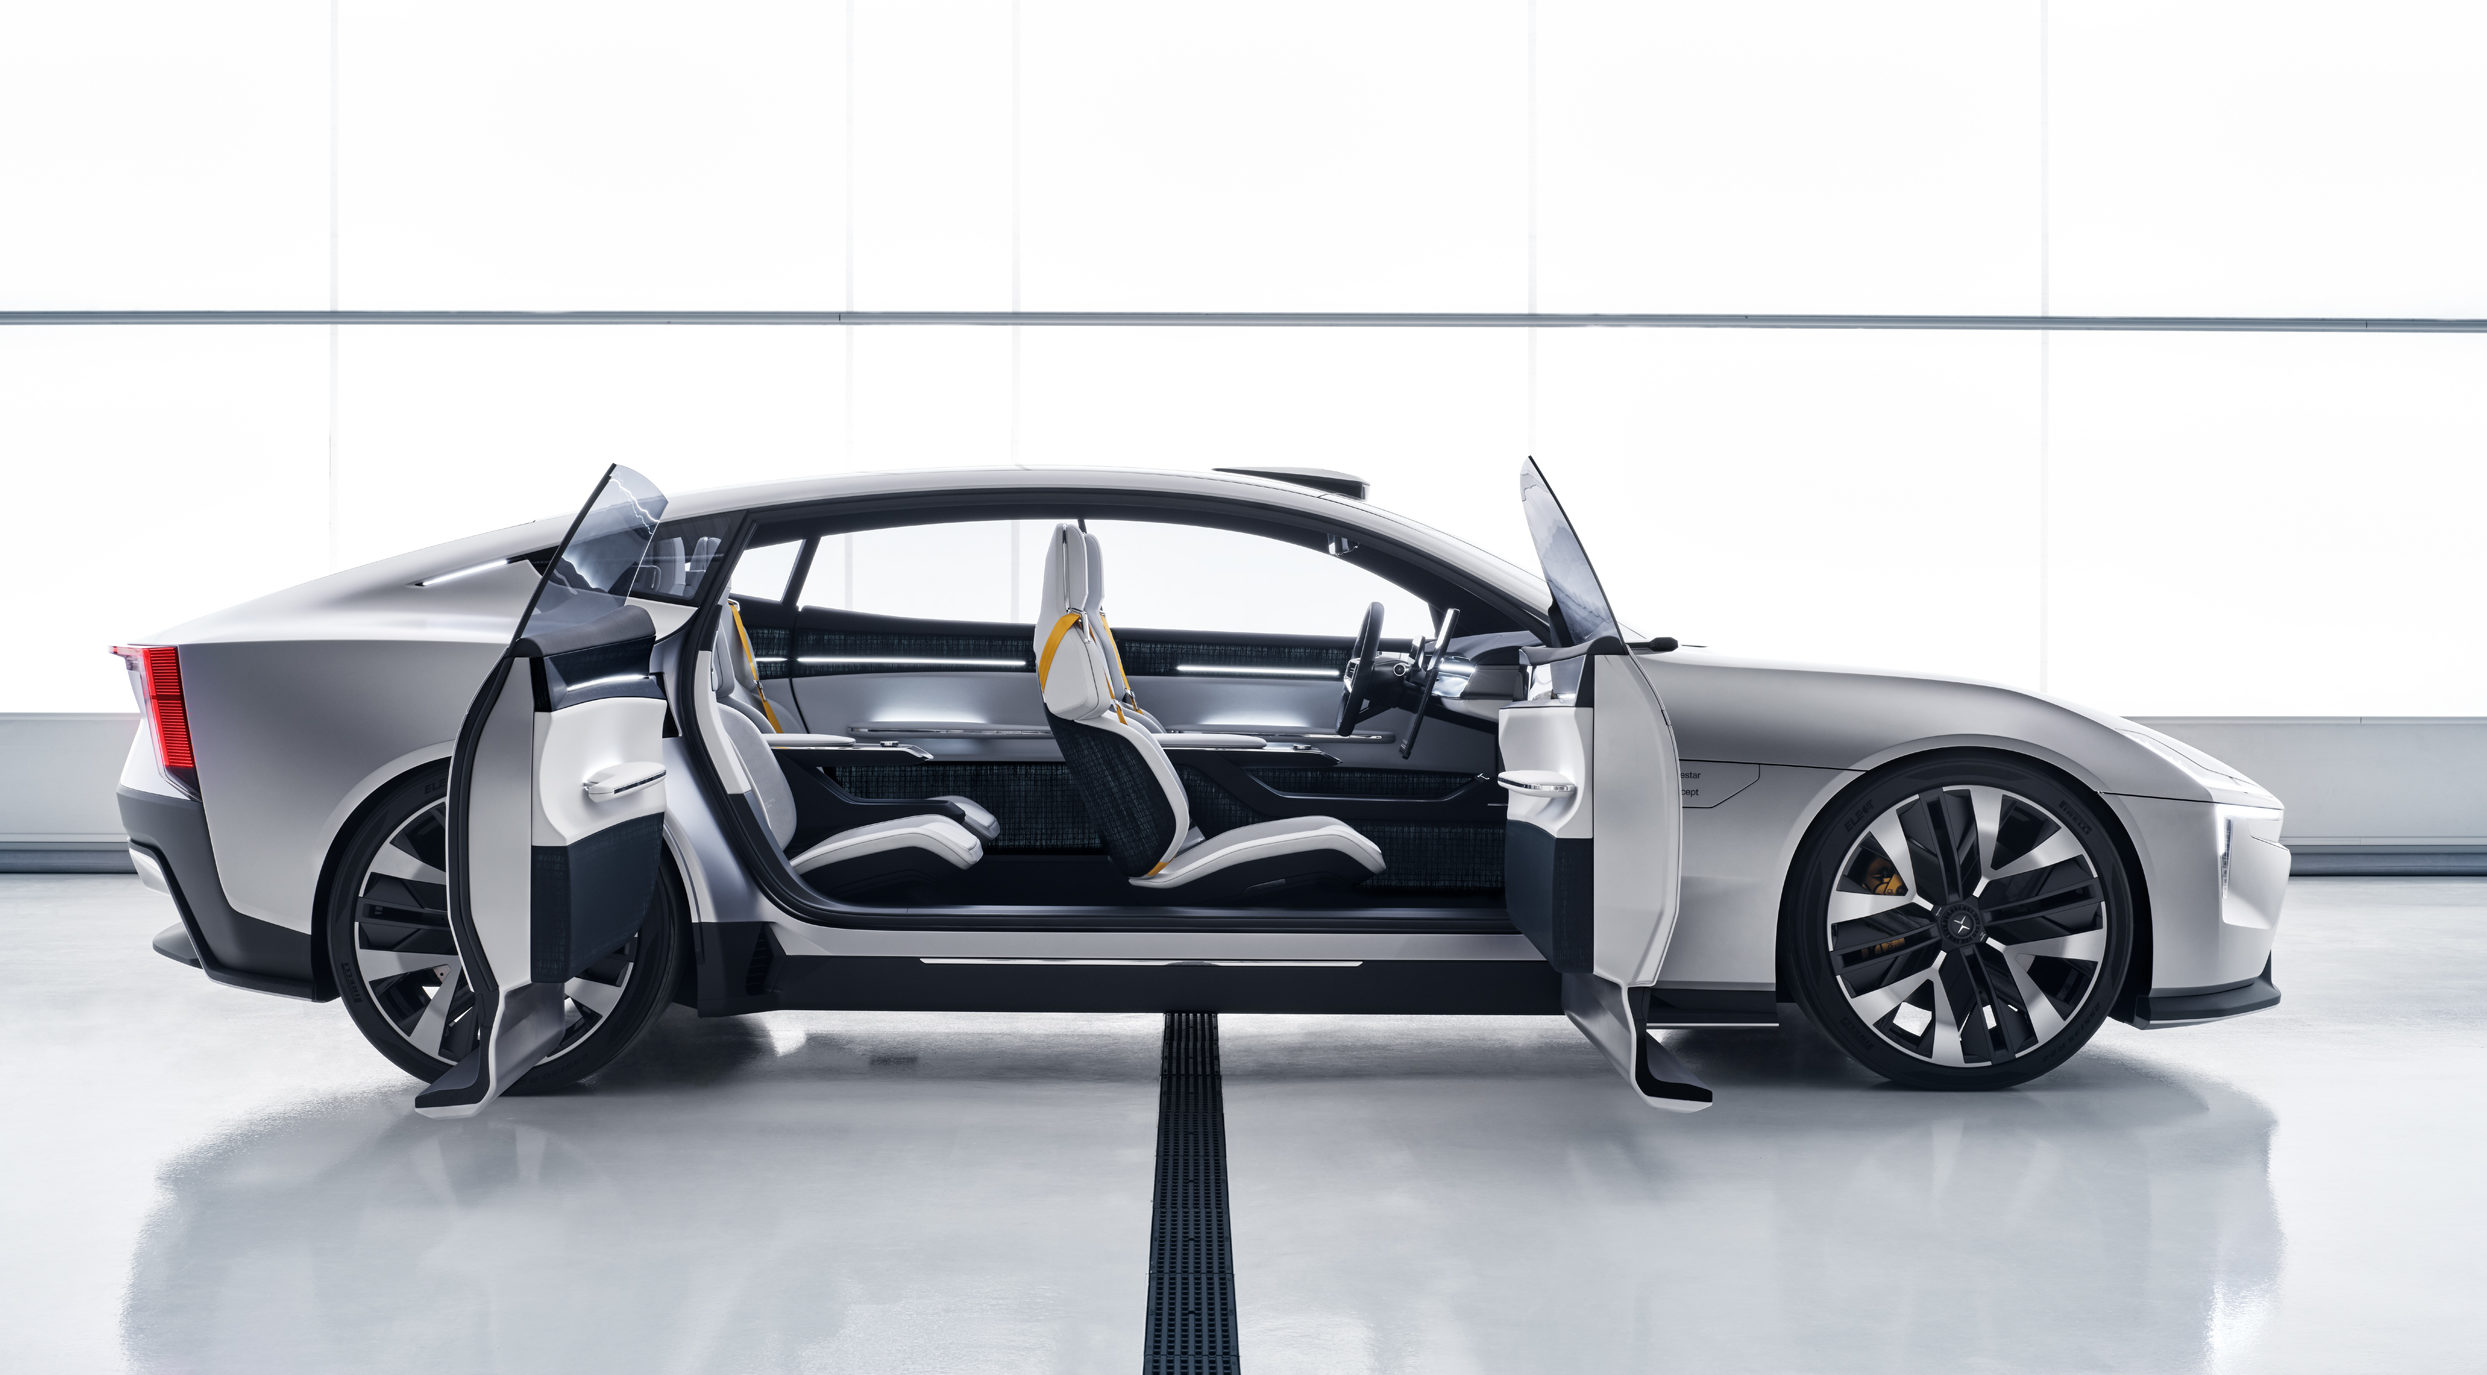 Polestar shows future vision with Precept concept car